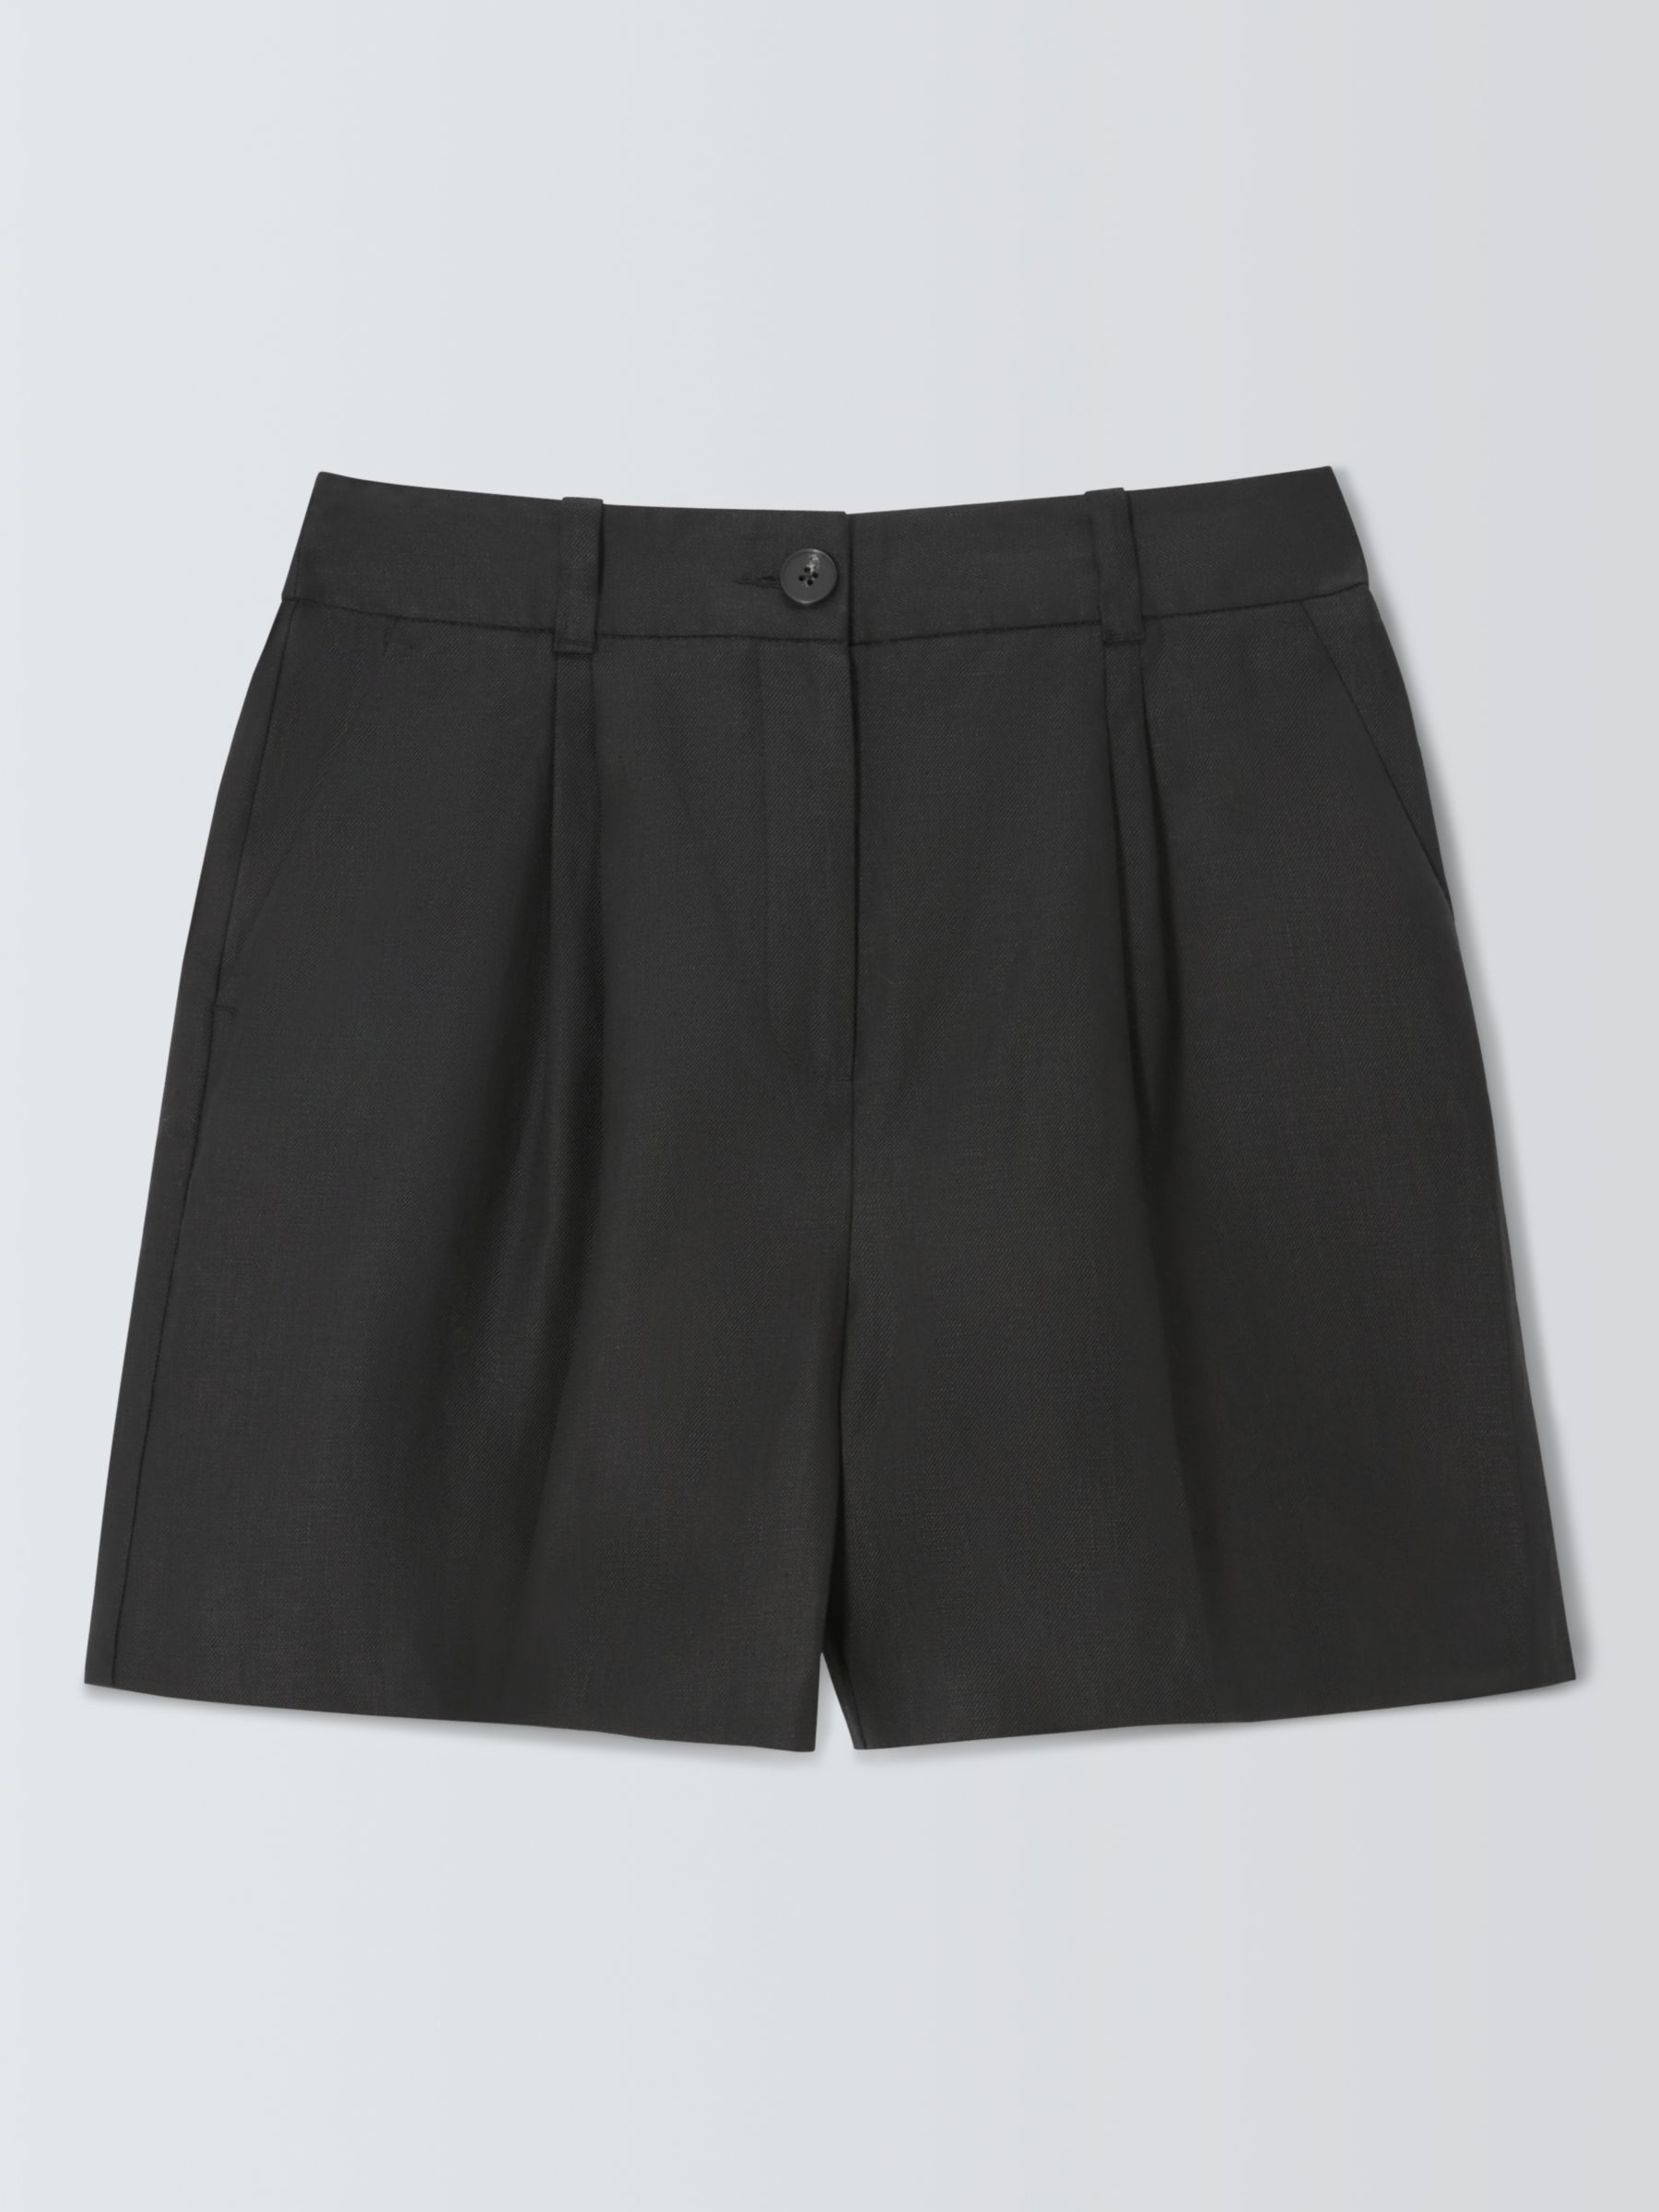 John Lewis Linen Shorts, Black, 8